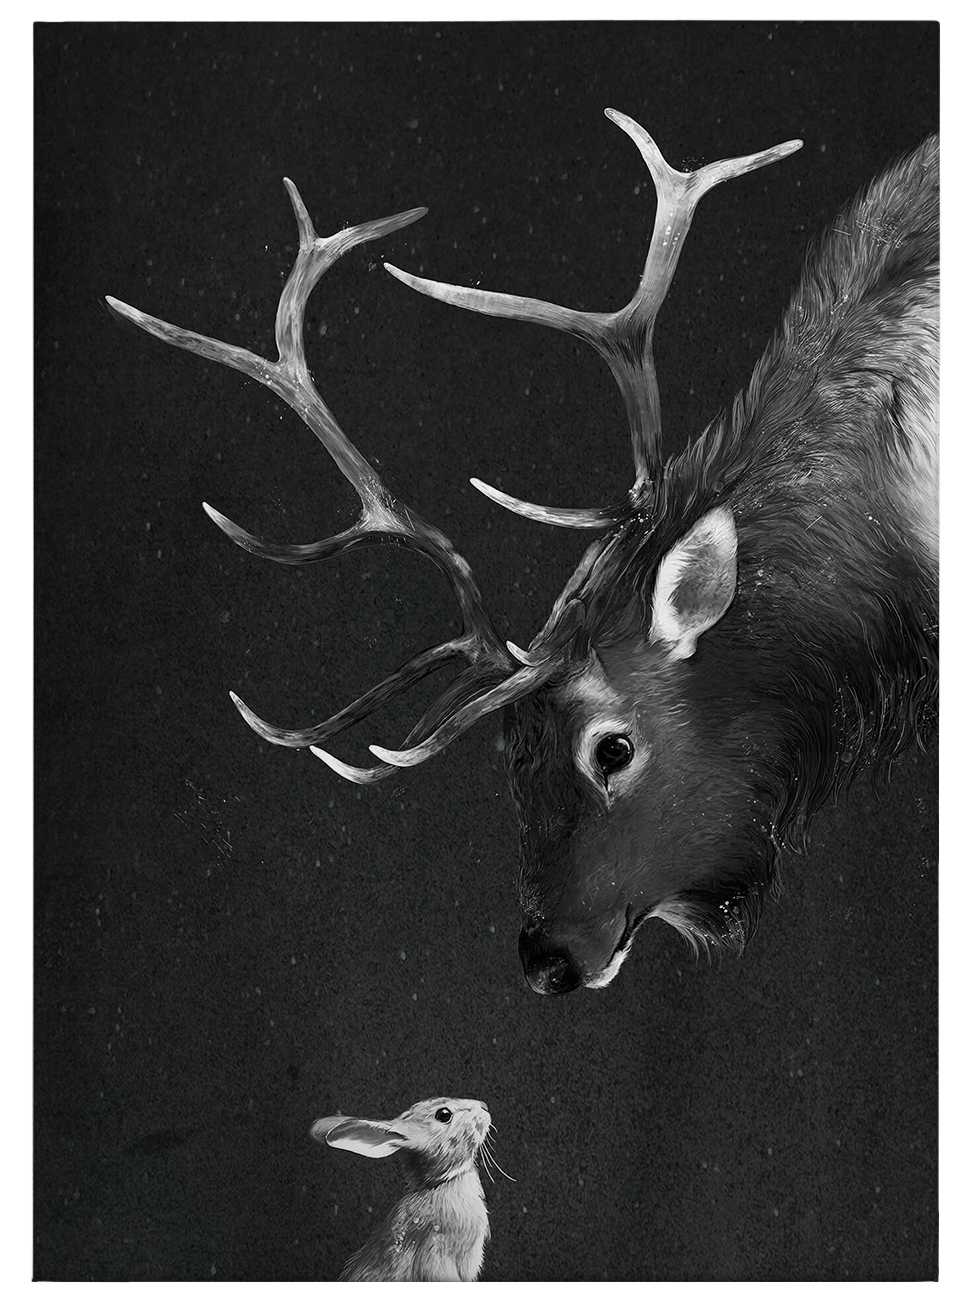             Graves Canvas print "Deer & Rabbit" – black and white
        